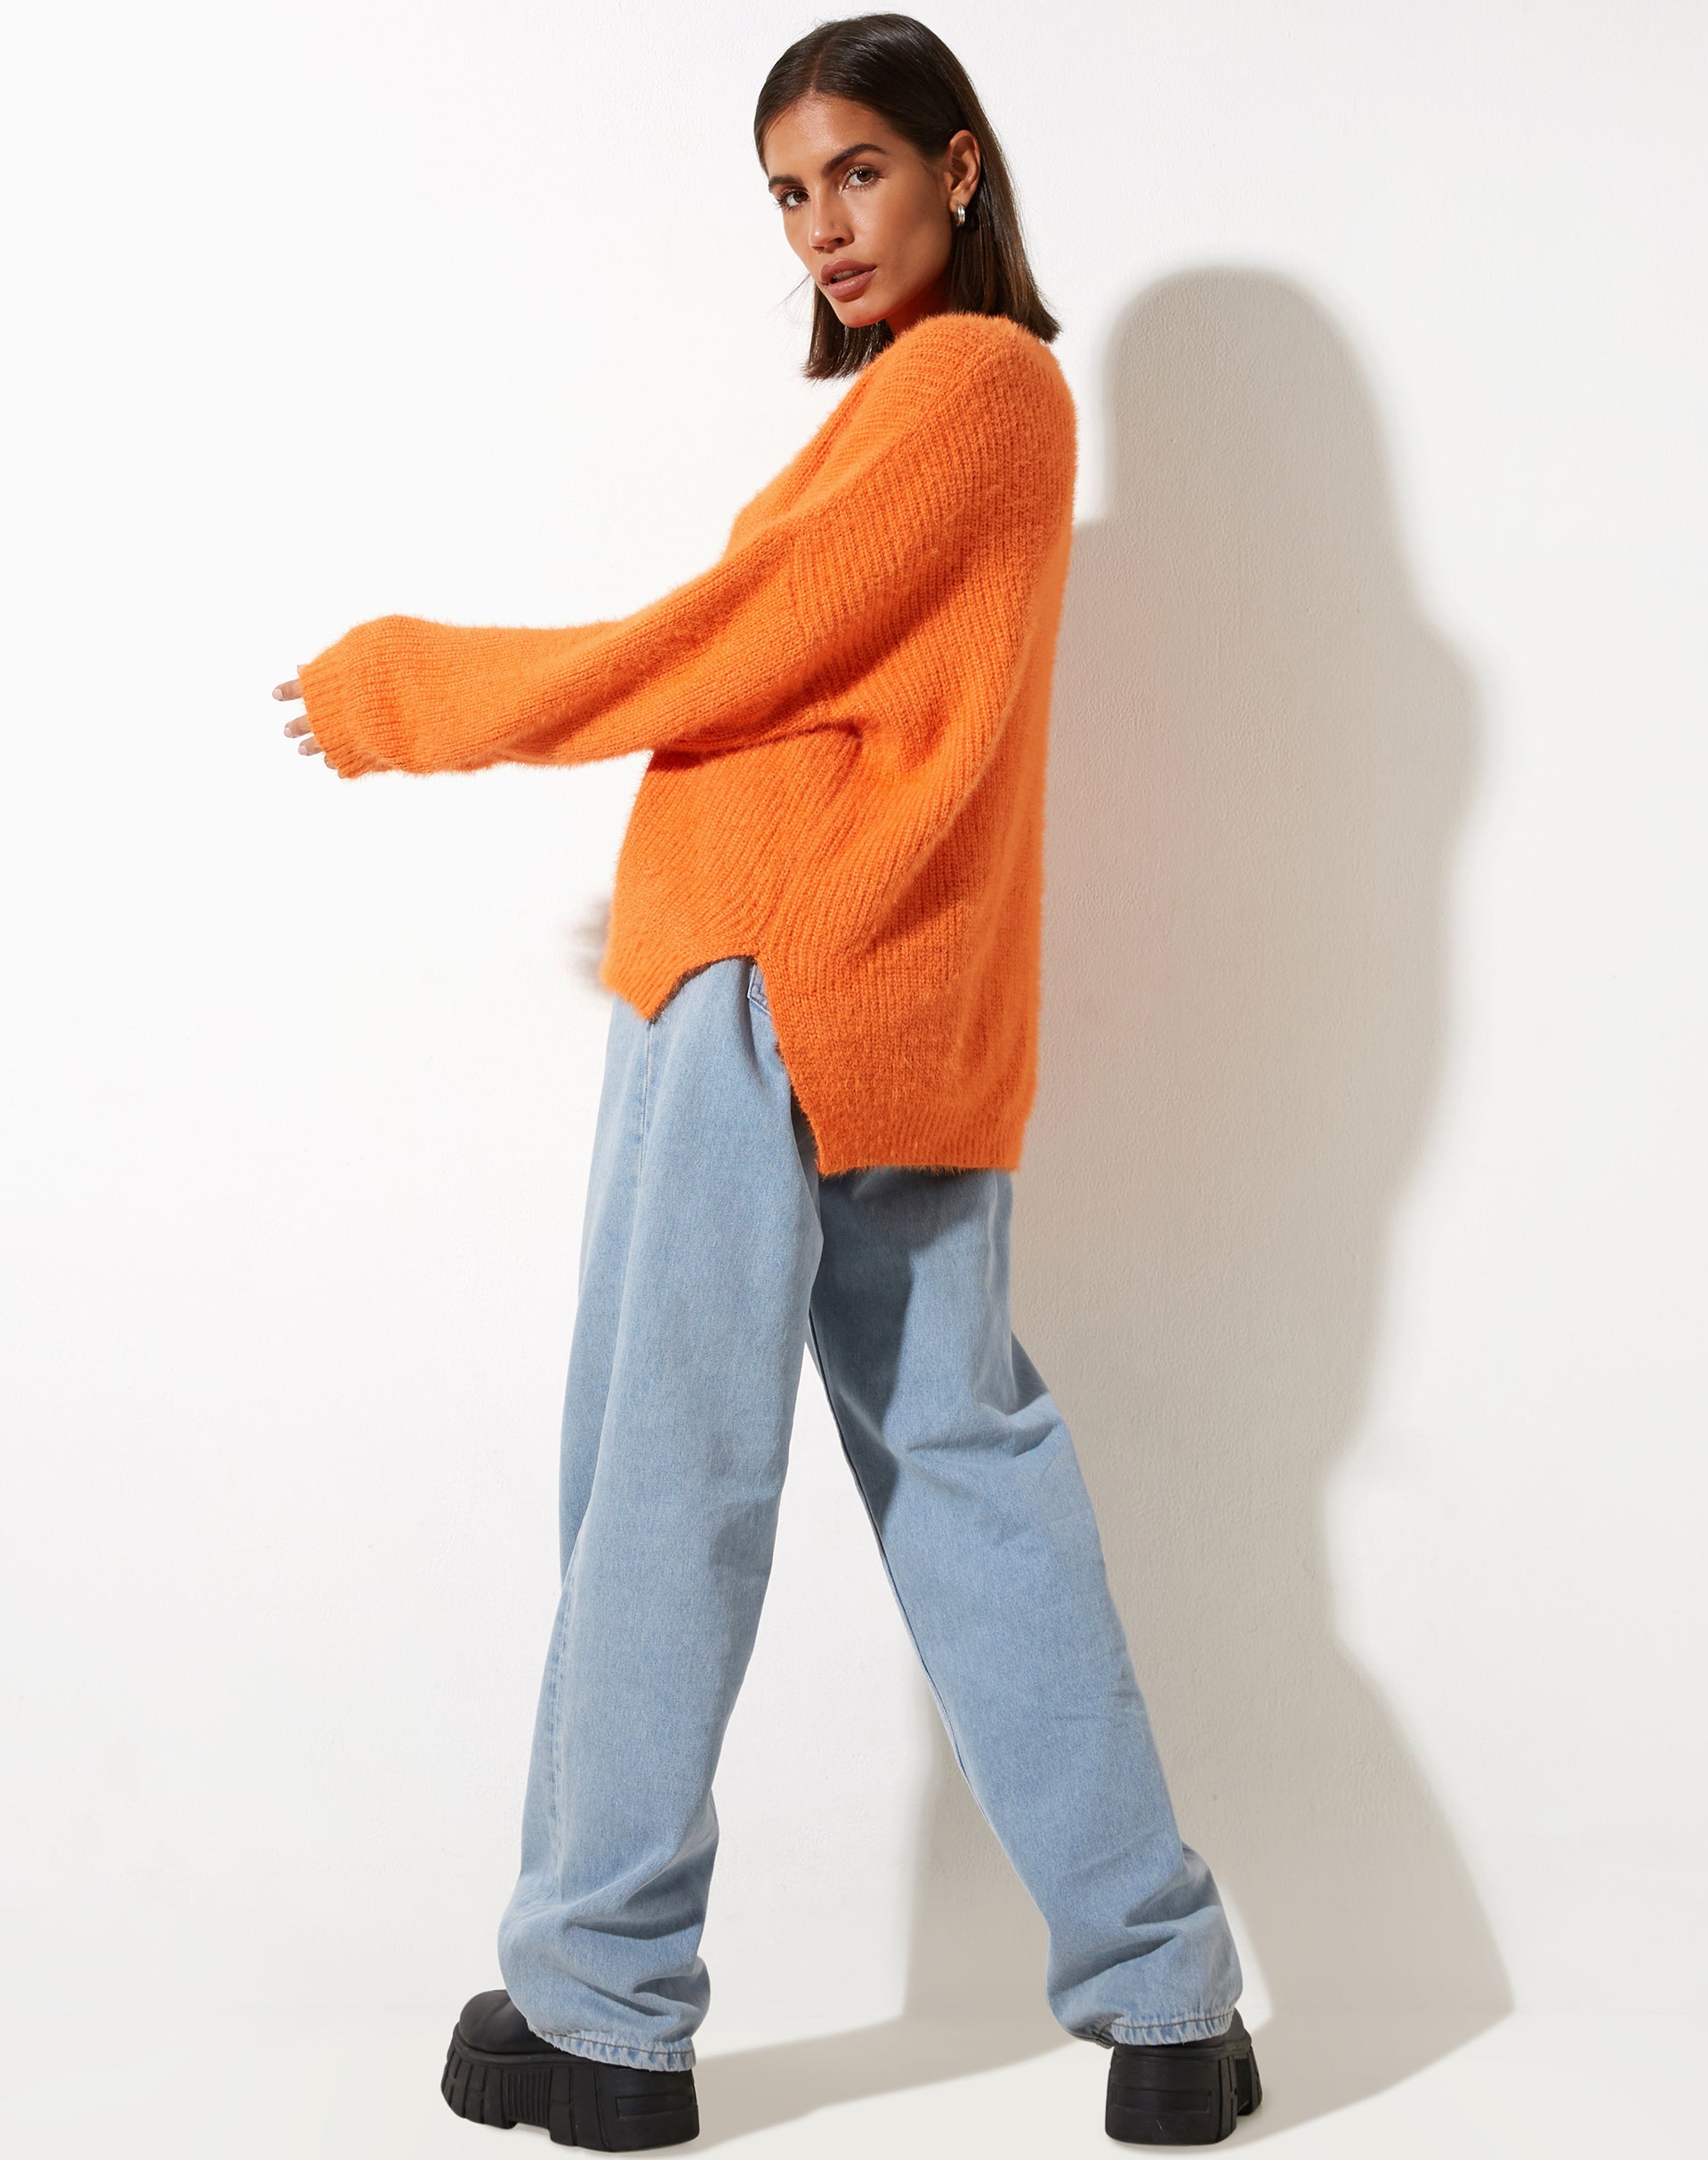 image of Bondy Jumper in Knit Persimmon Orange